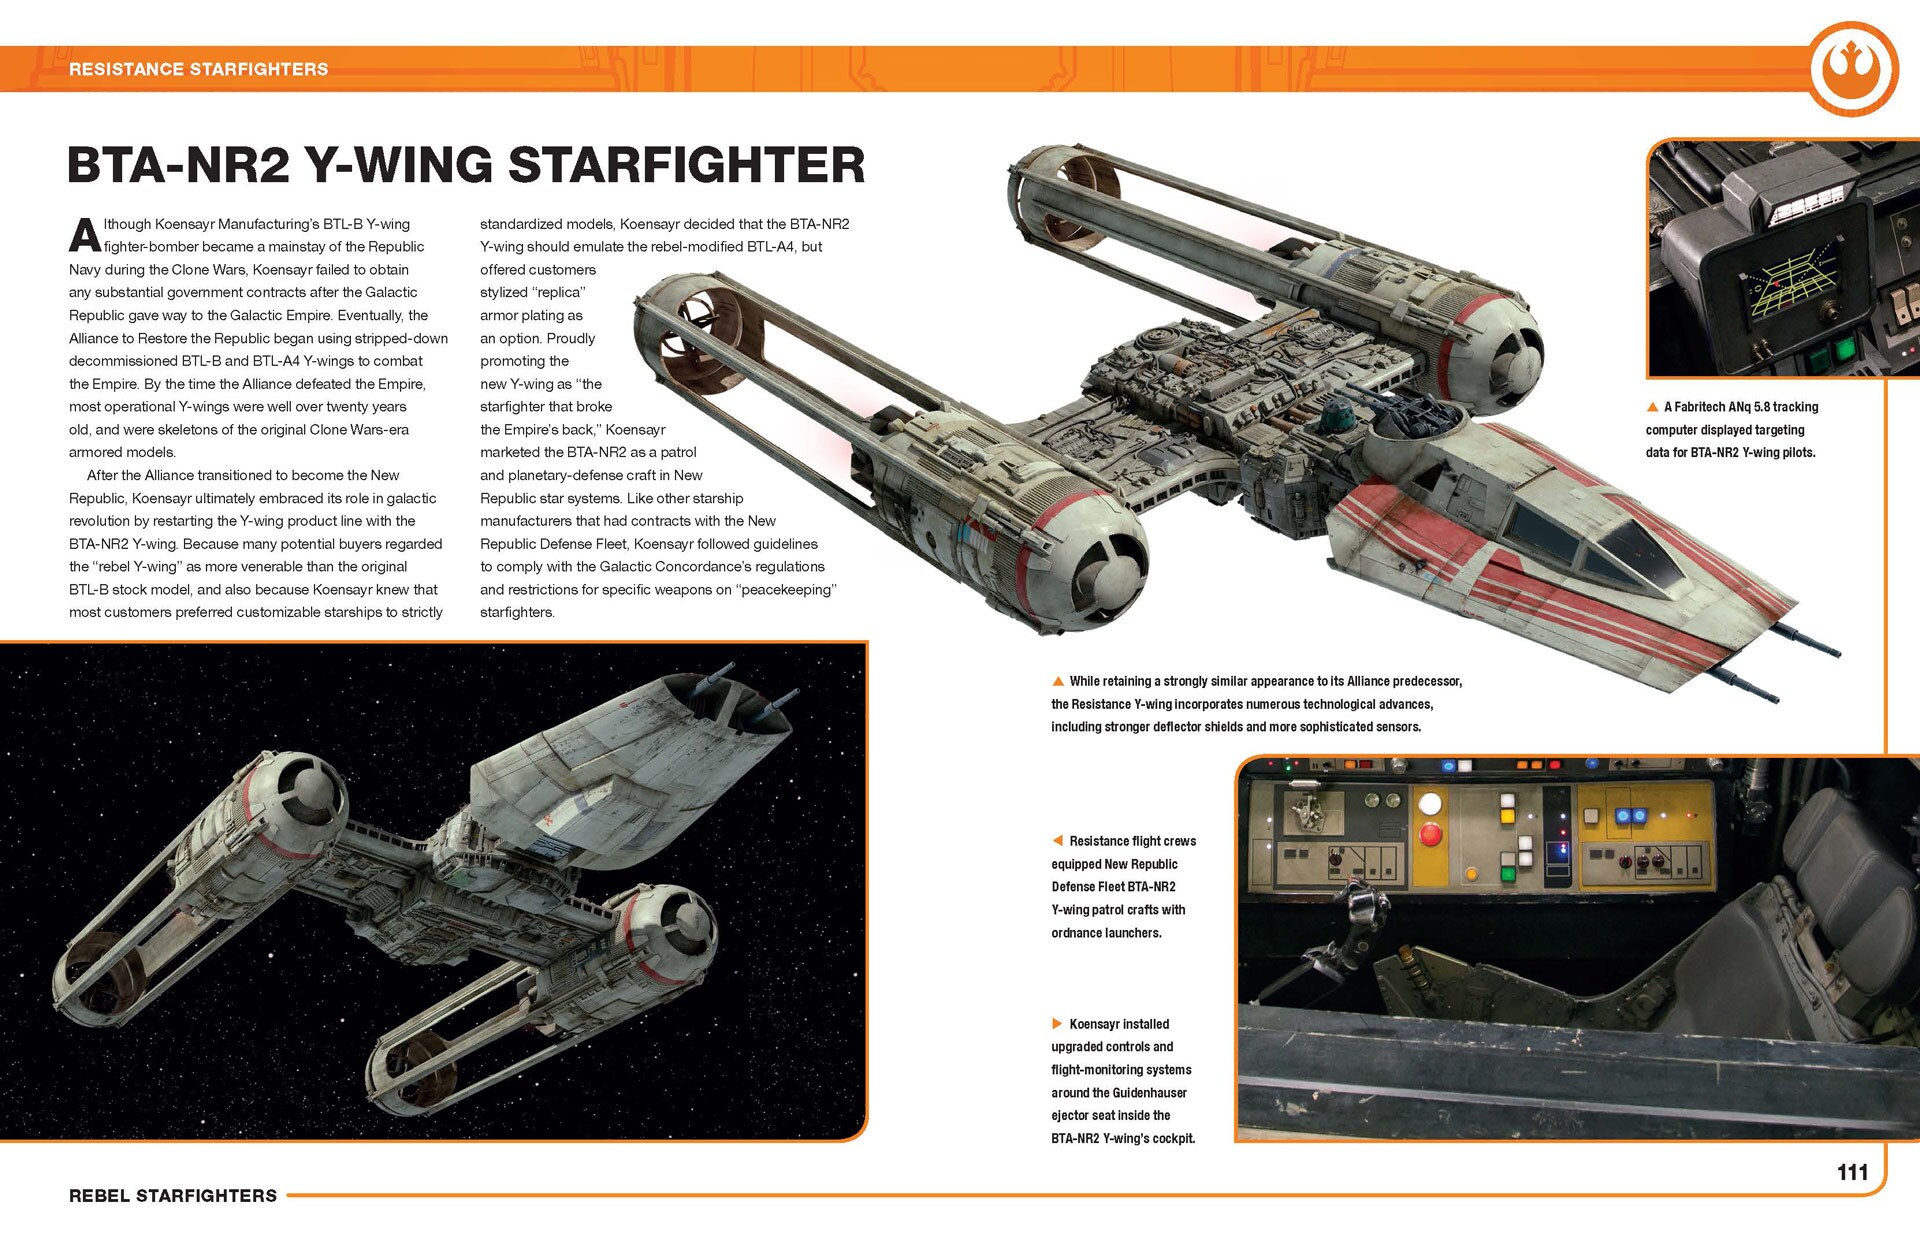 Rebel Starfighters book - Y-wing spread